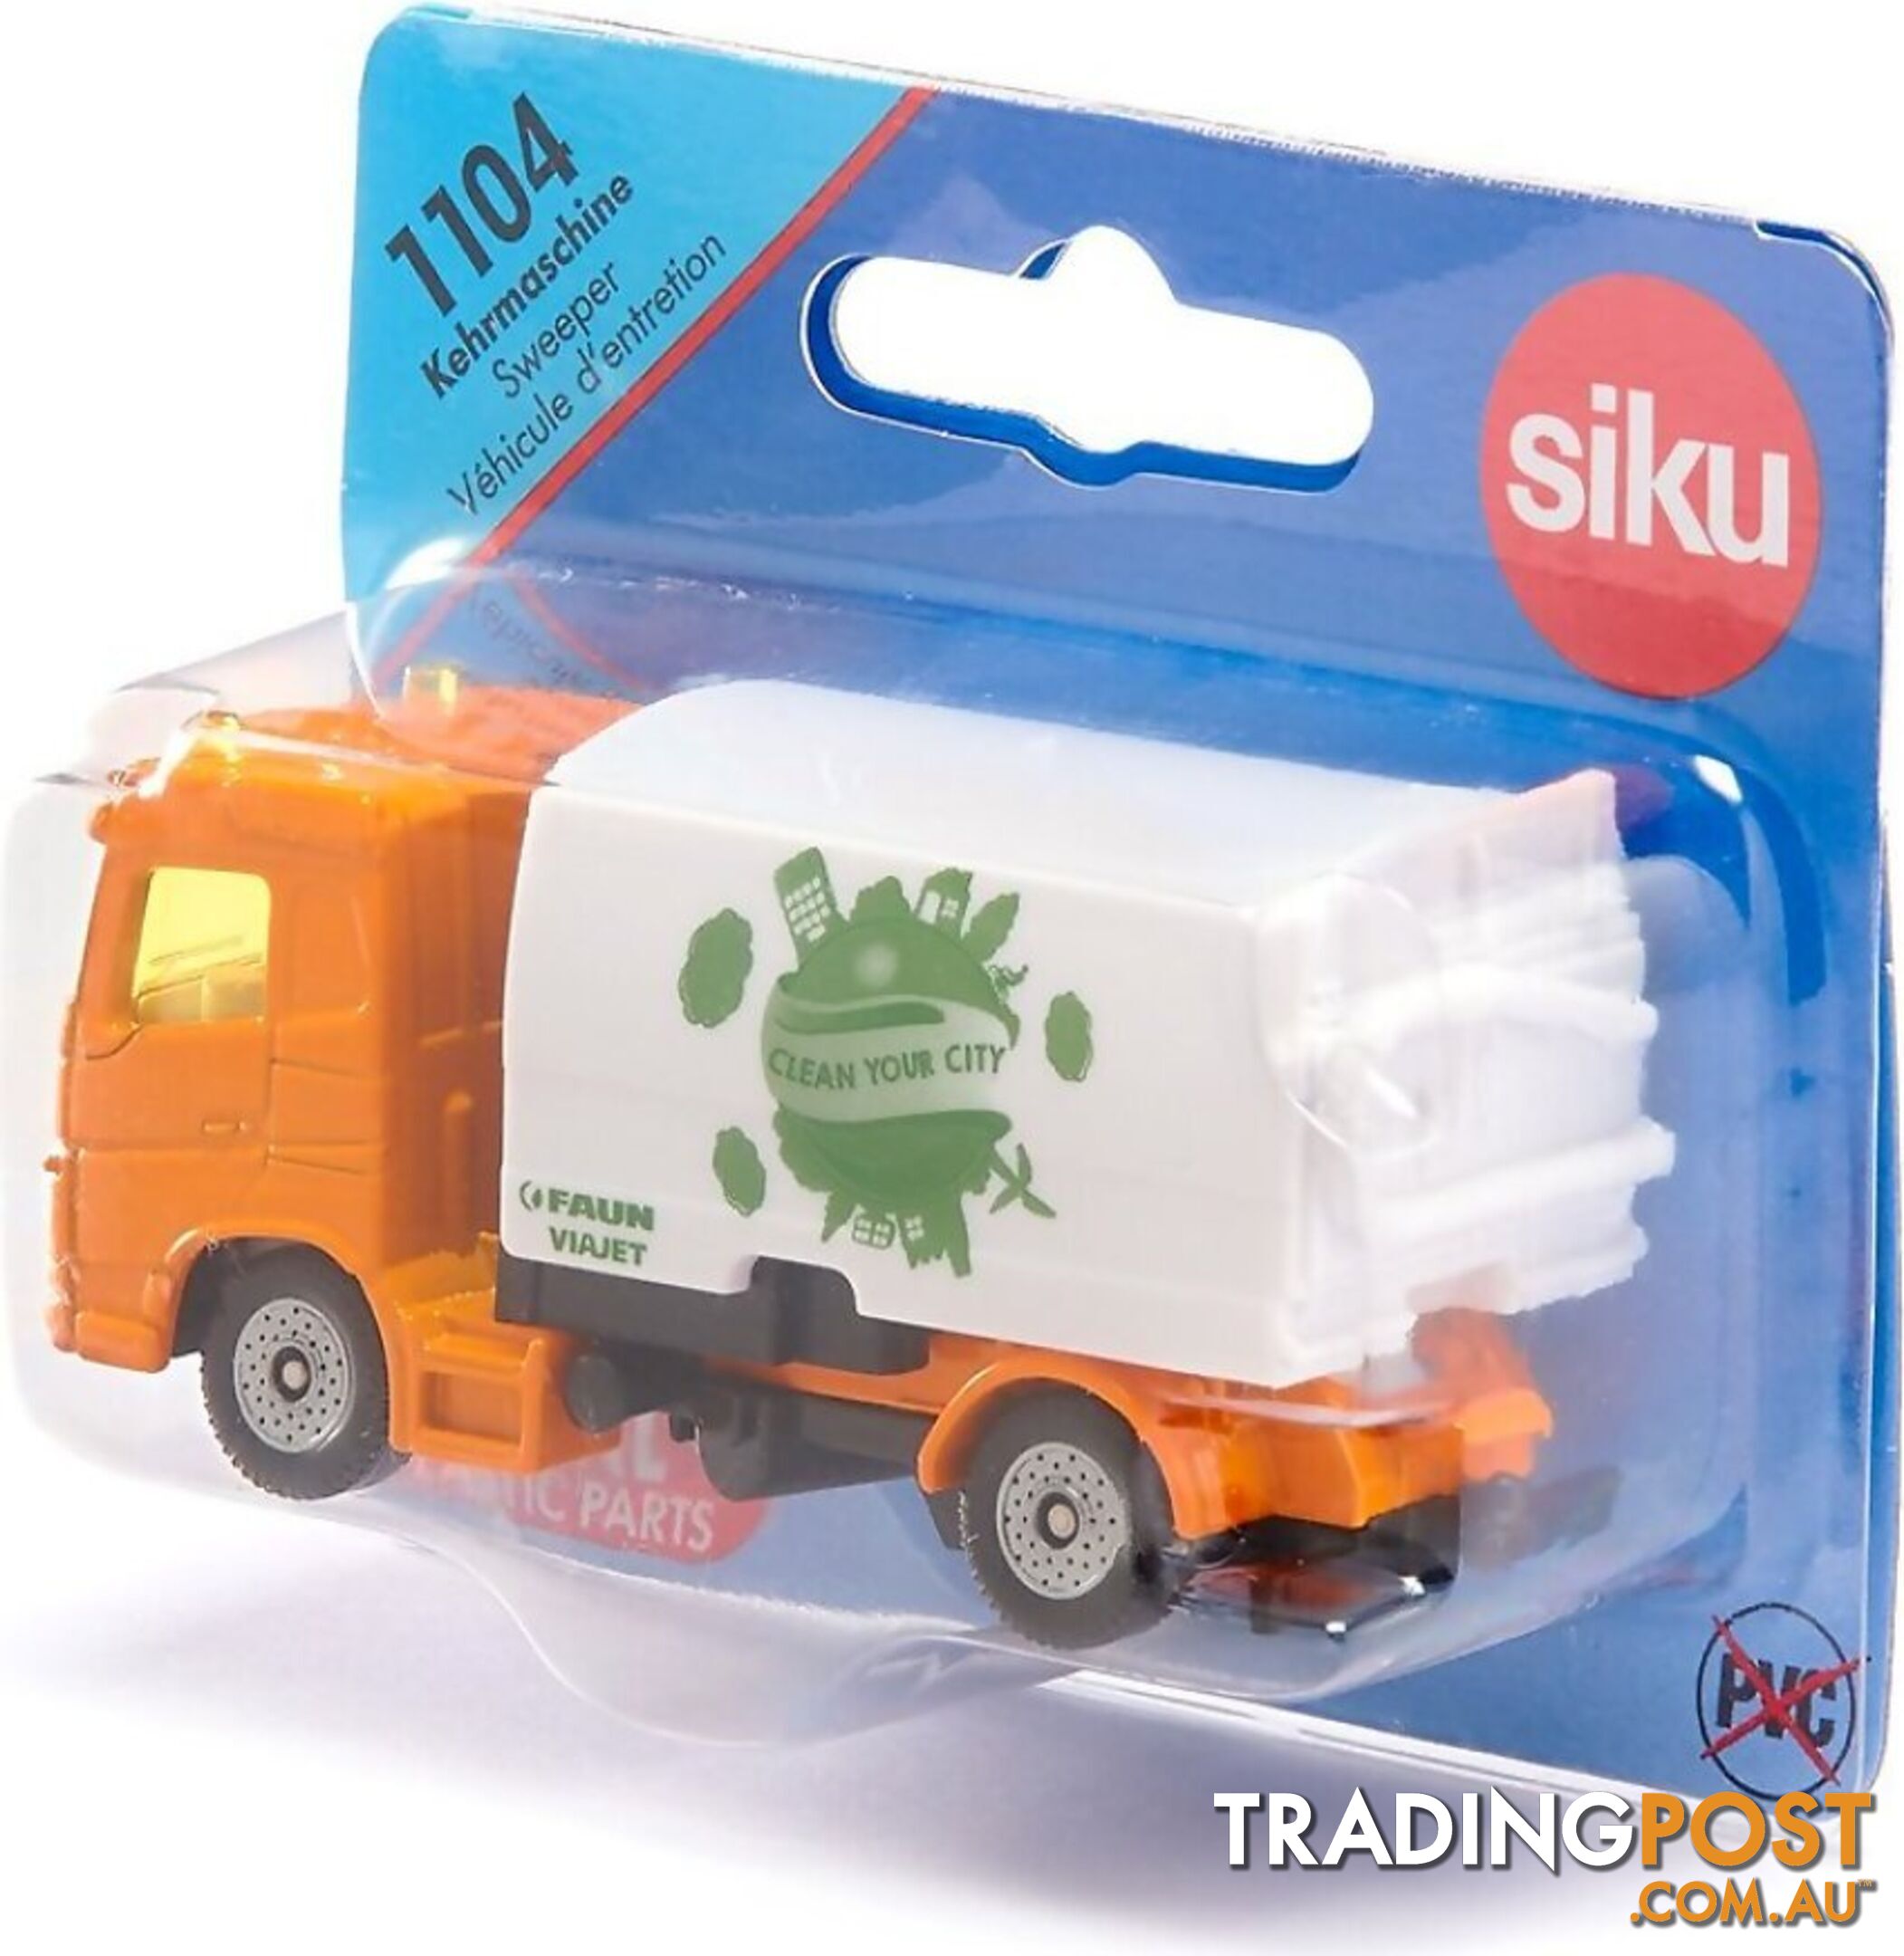 Siku - Sweeper - Mdsi1104 - 4006874011049